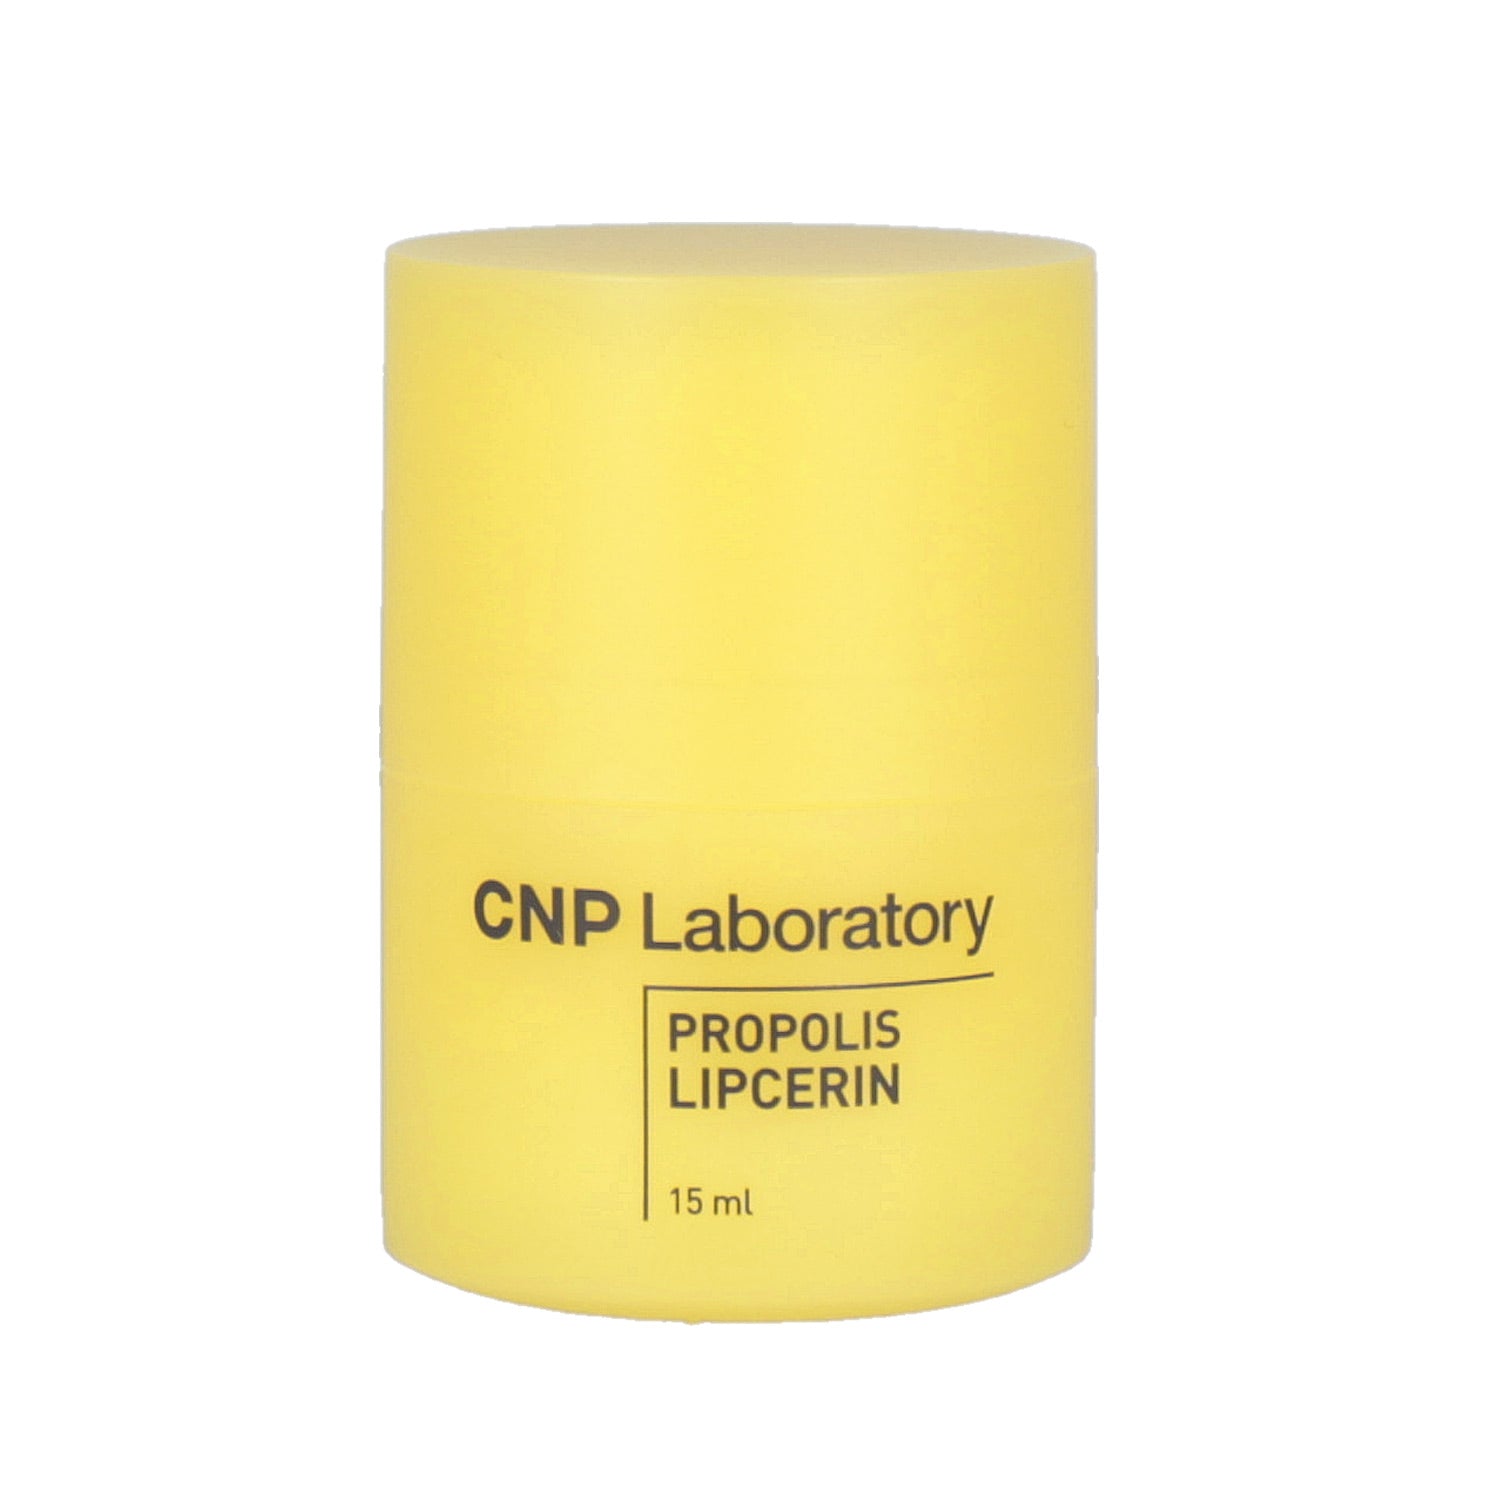 CNP Laboratory Propolis Lipcerin 15ml - DODOSKIN